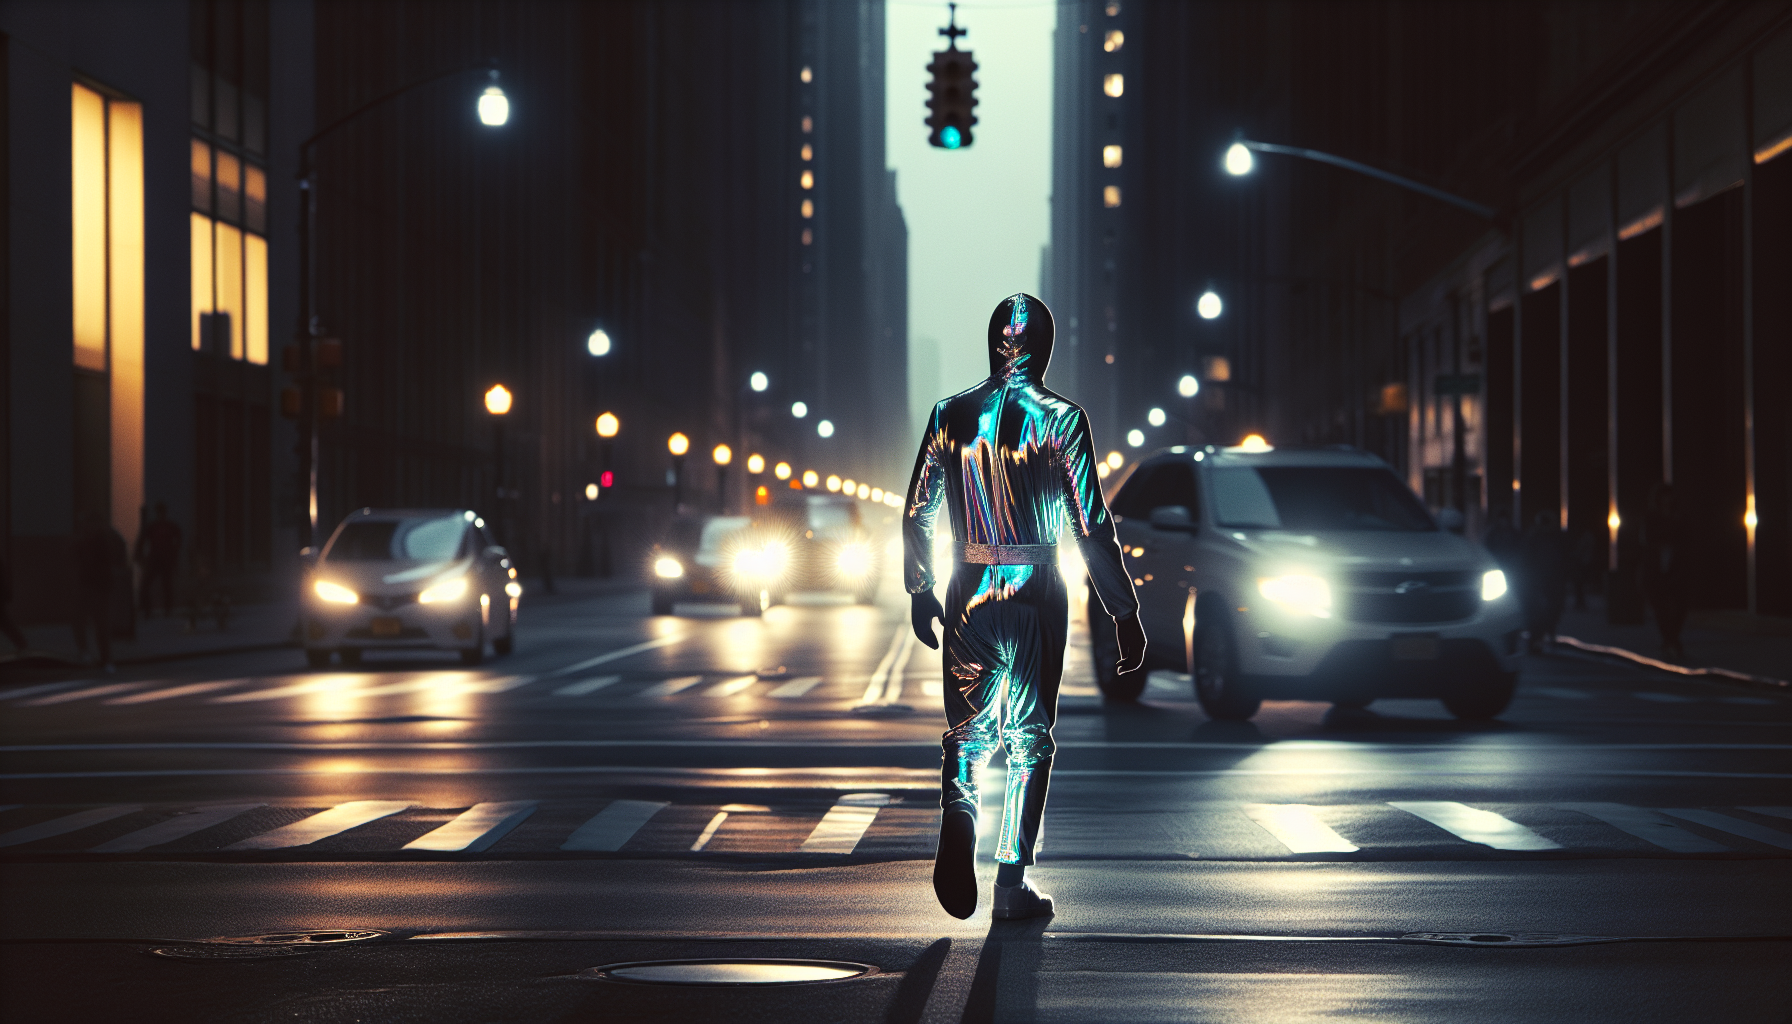 Person wearing reflective clothing walking at night